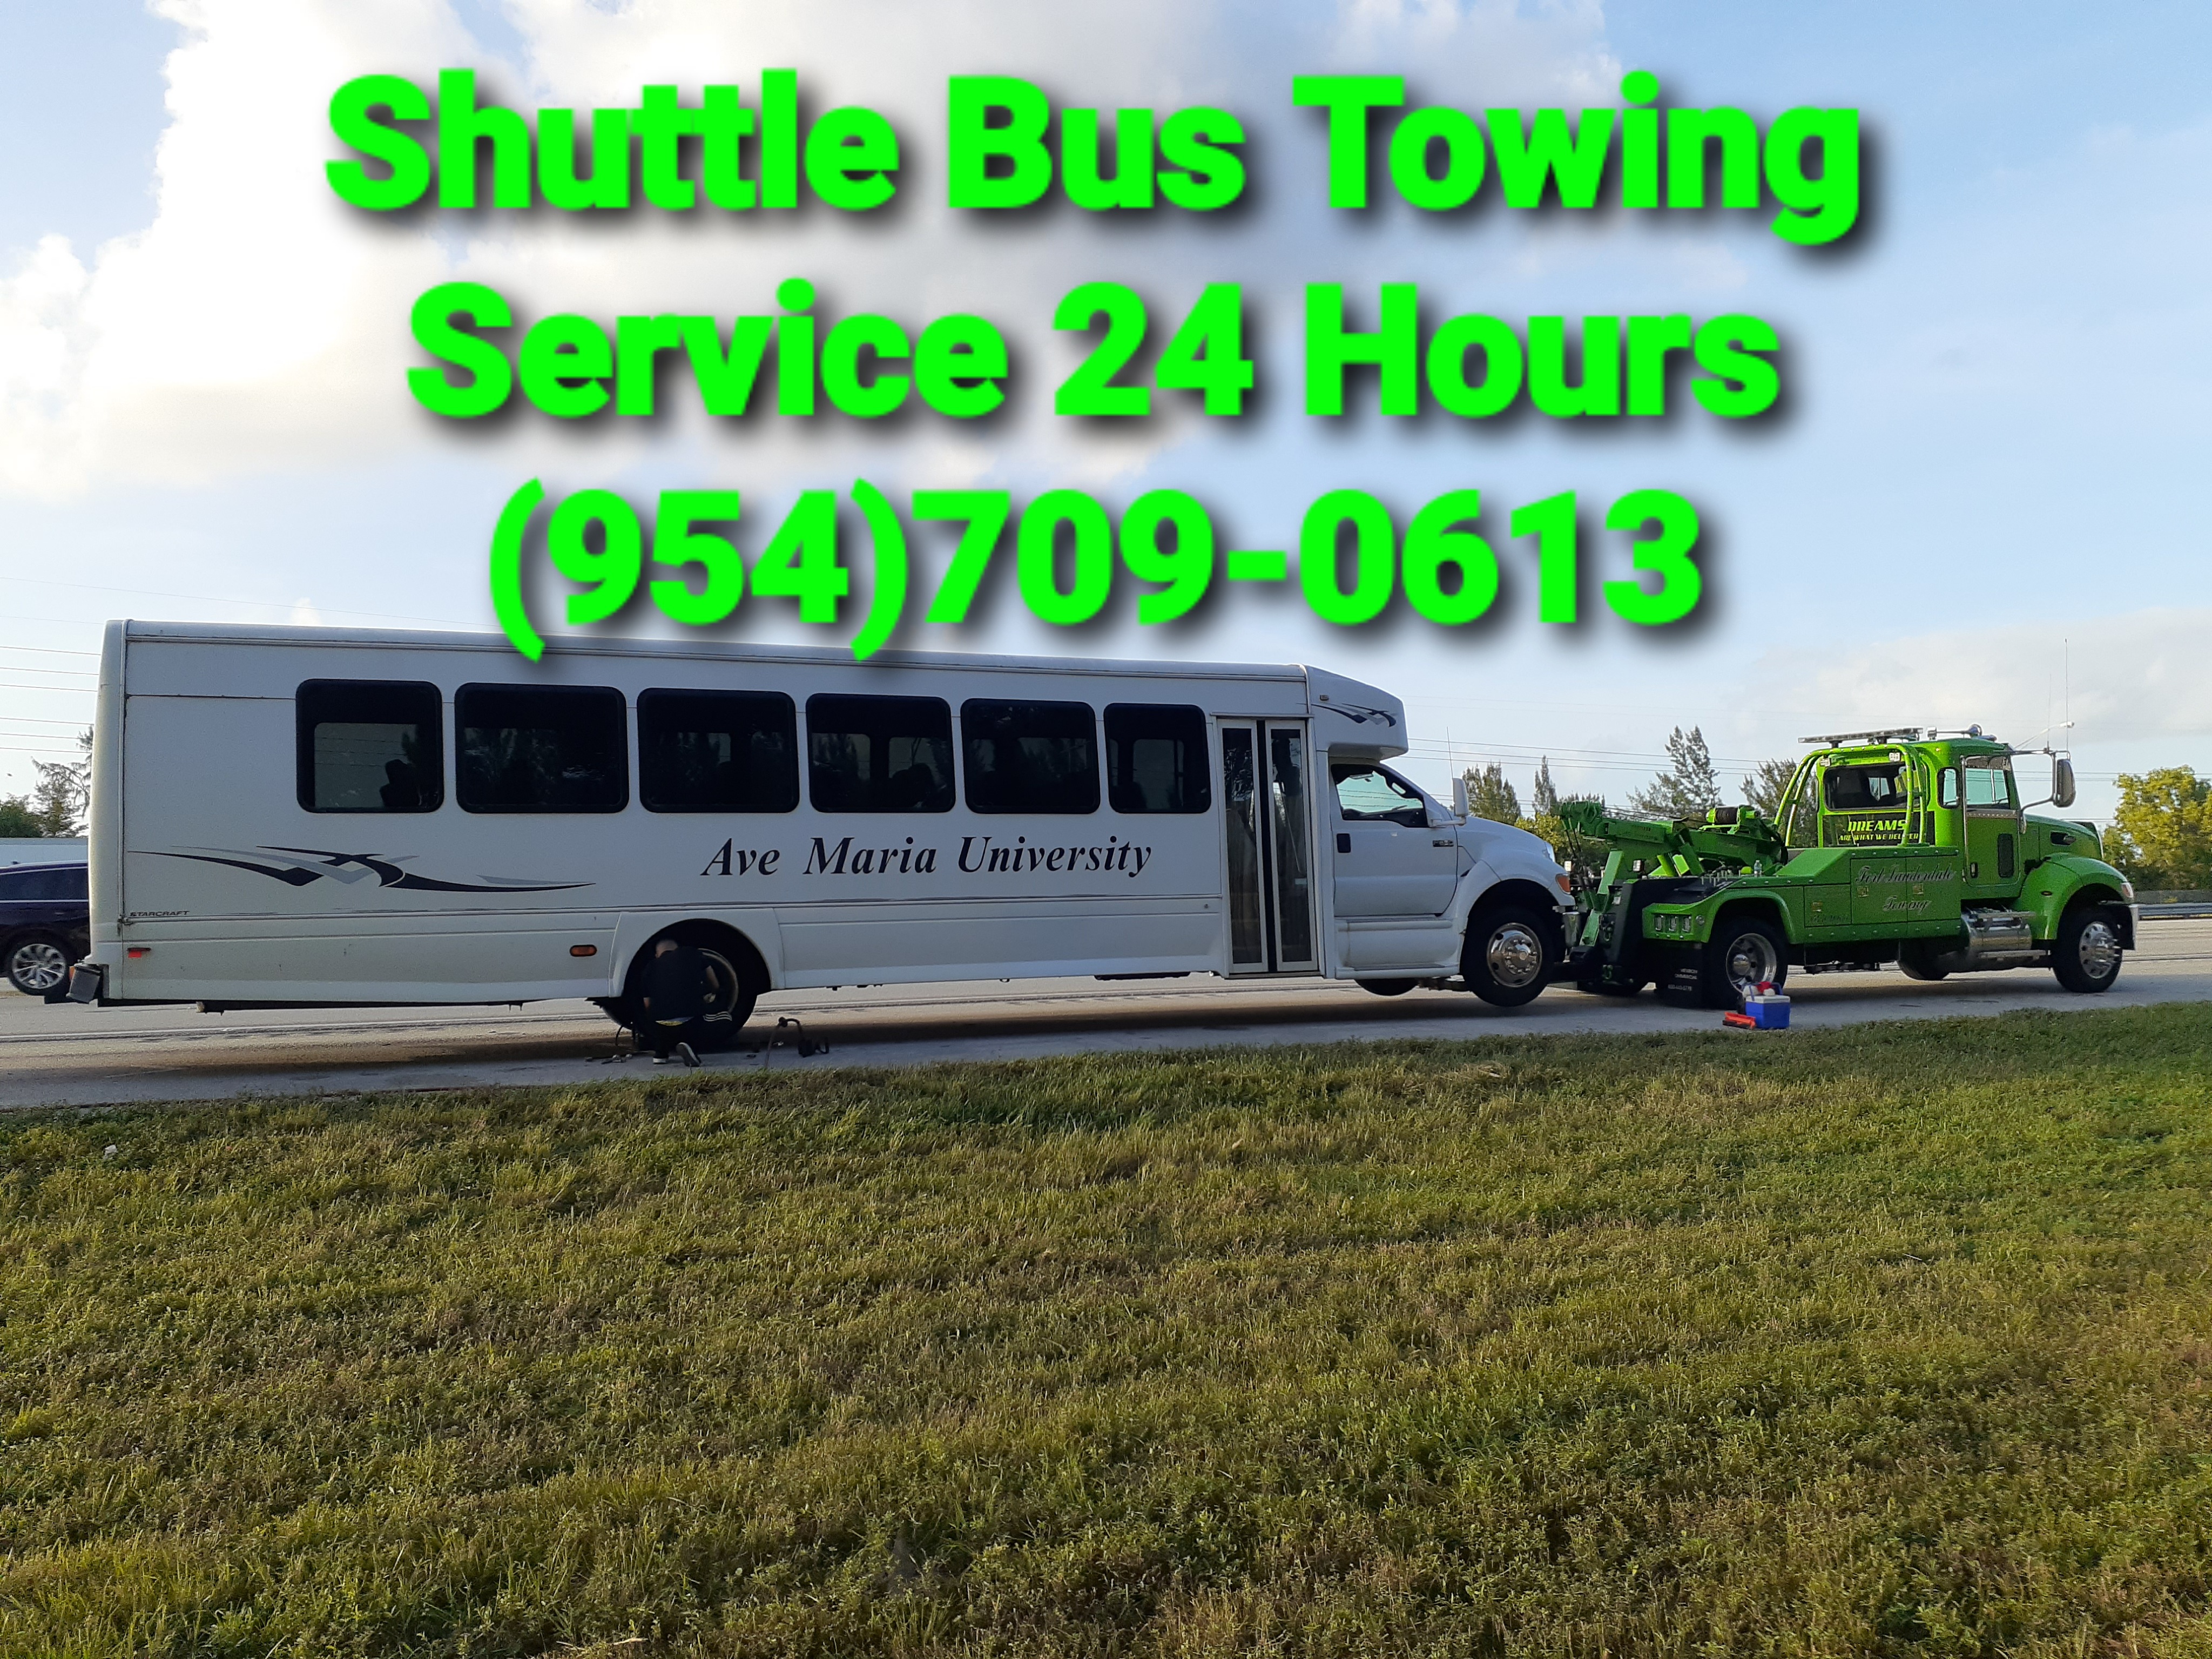 Shuttle Bus Towing Service Near Me Davie Fl